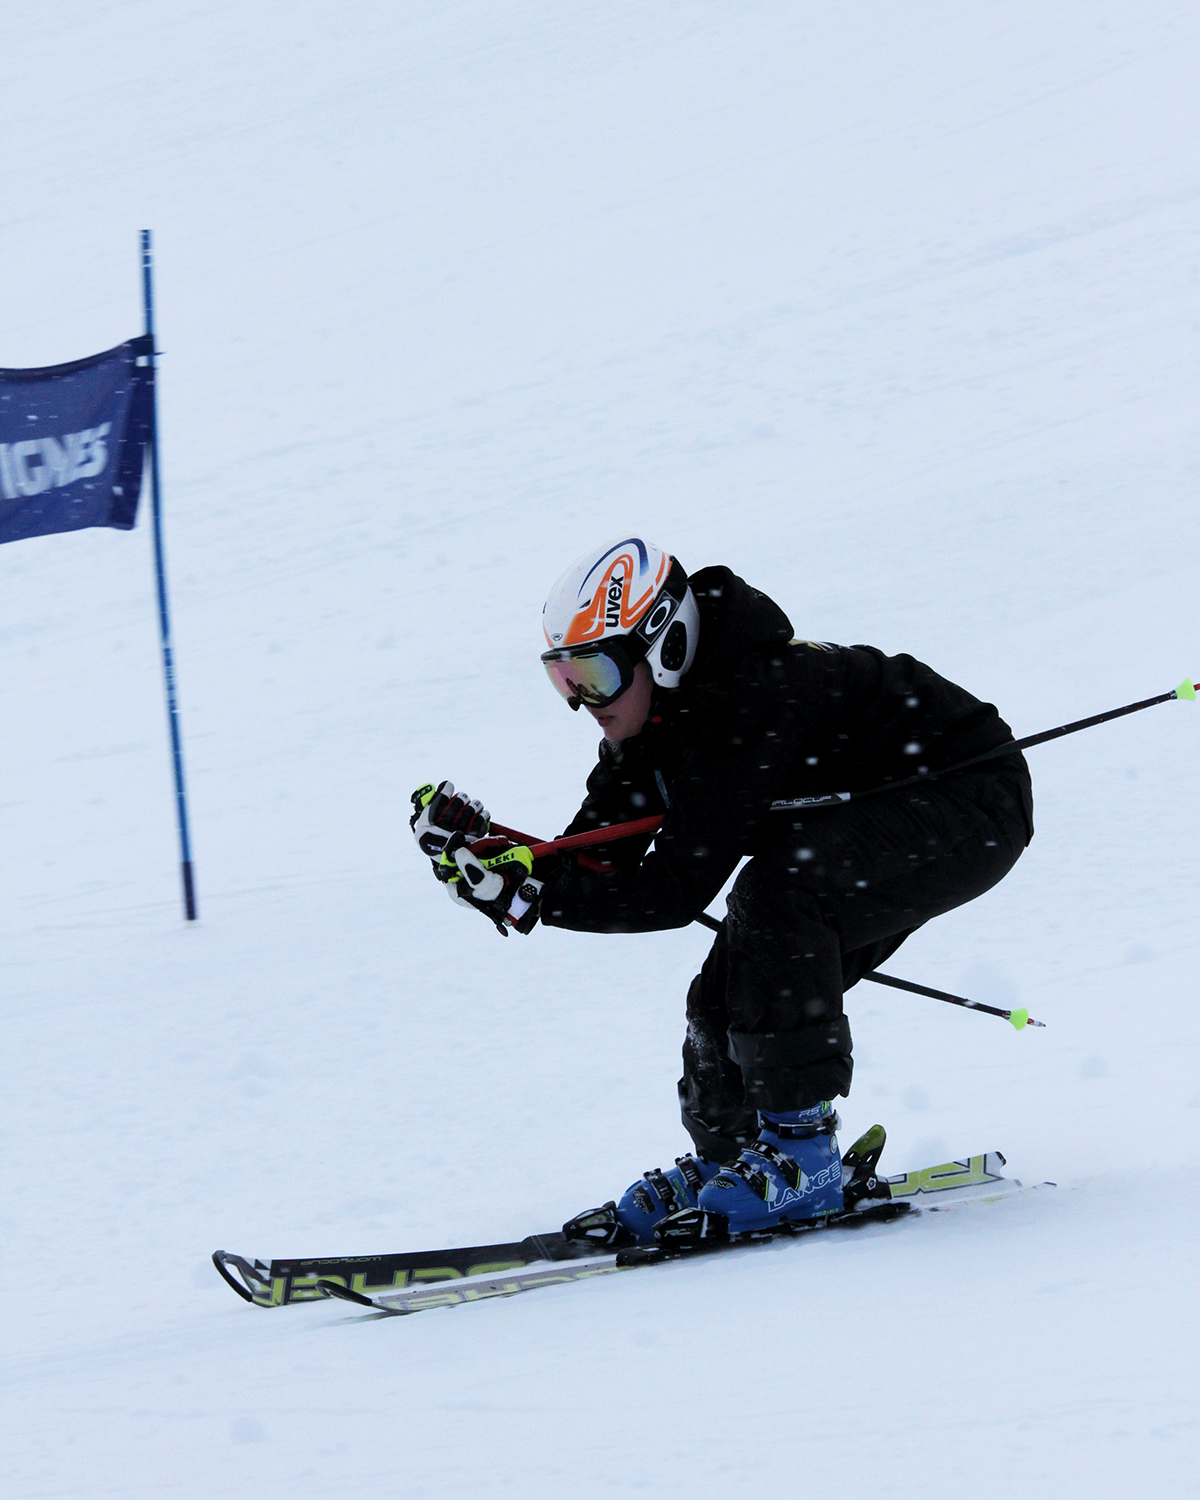 Adobe Portfolio Snowboarding skiing sheffield University hallam varsity canon eos 7D Sigma 70-200mm 24-105mm tignes